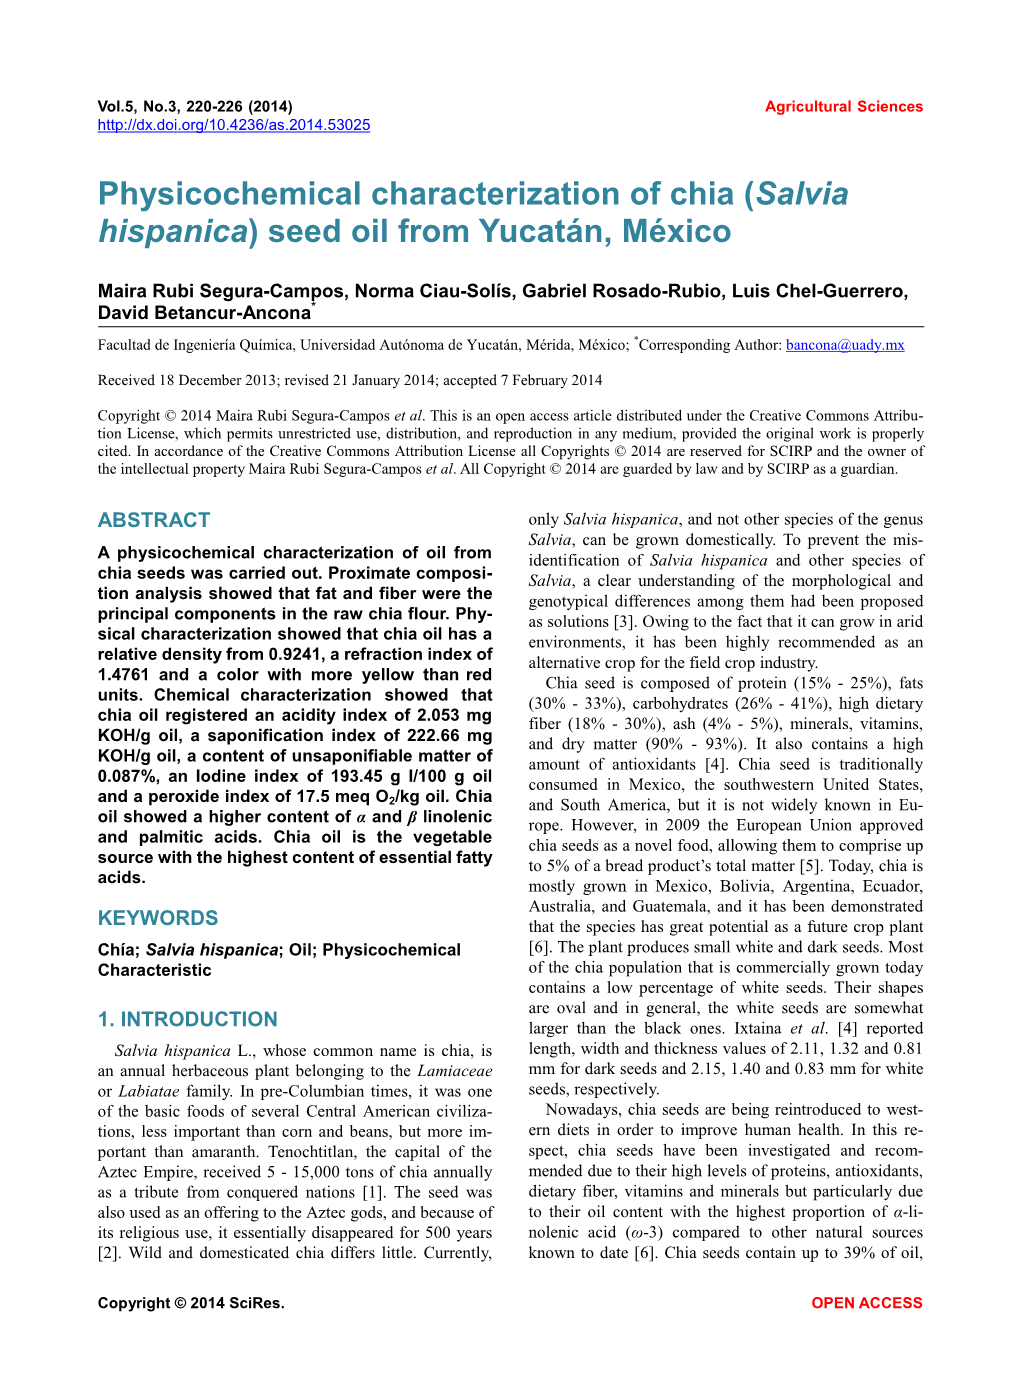 Physicochemical Characterization of Chia (Salvia Hispanica) Seed Oil from Yucatán, México